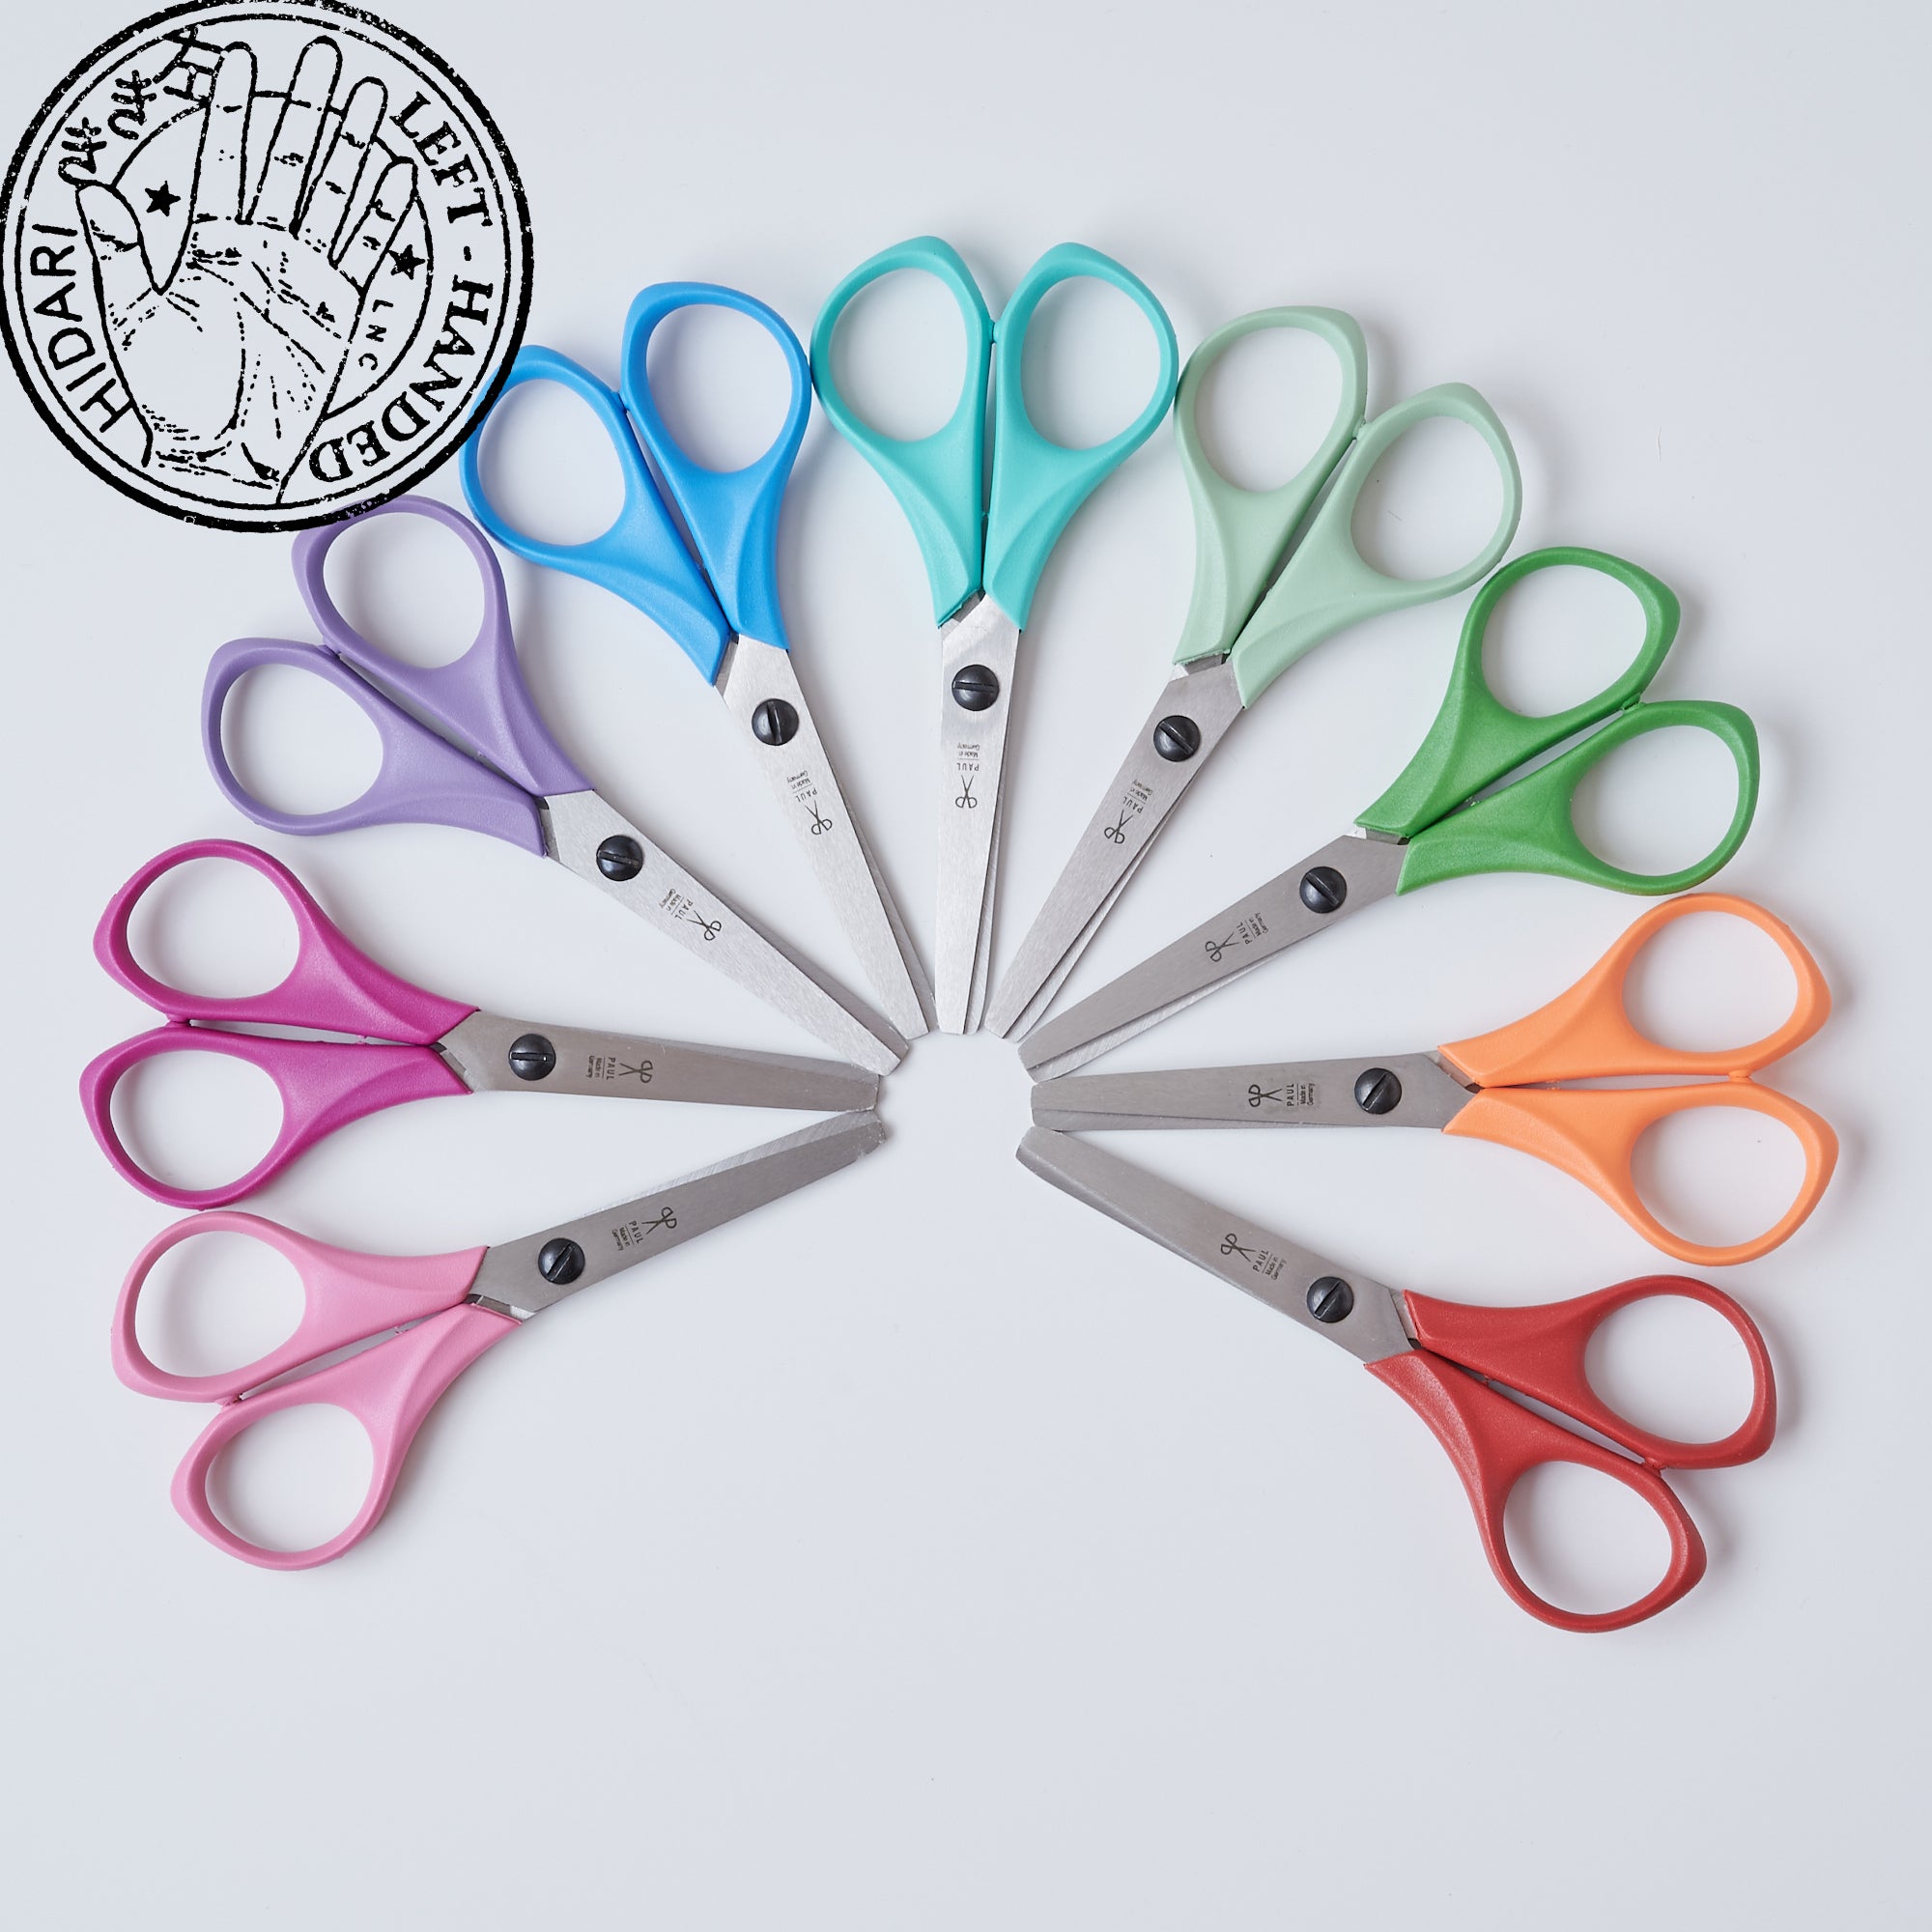 Left-Handed Kinder Scissors from Scherenmakufaktur Paul